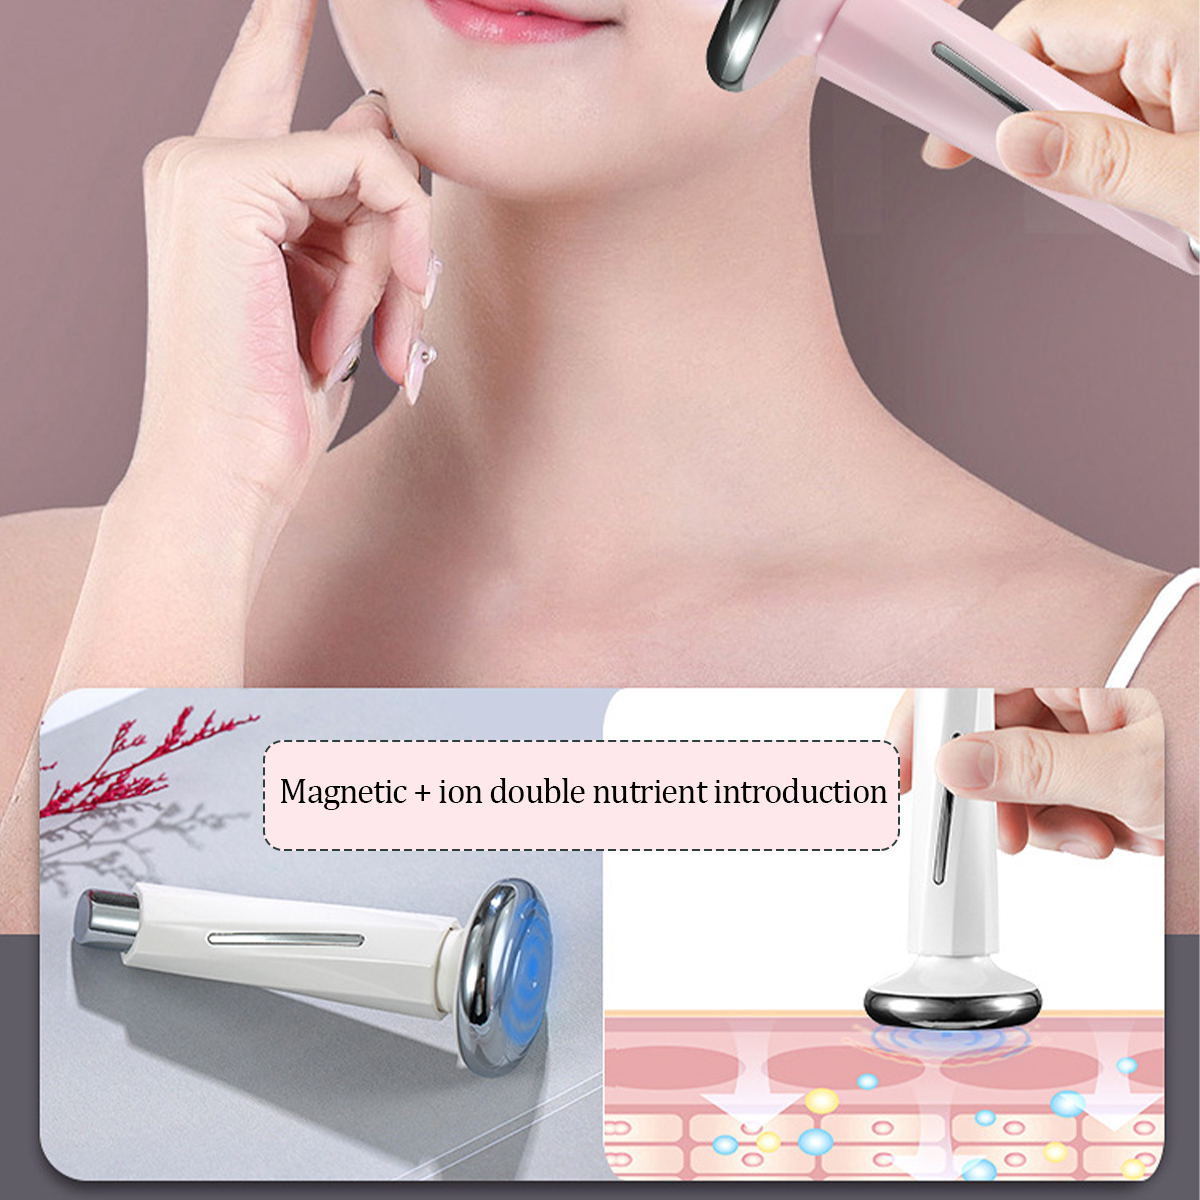 Electric-Magnetic-Vibration-Facial-Massager-Portable-Eyes-Skin-Rejuvenation-Lifting-Wrinkle-Remover--1579656-3